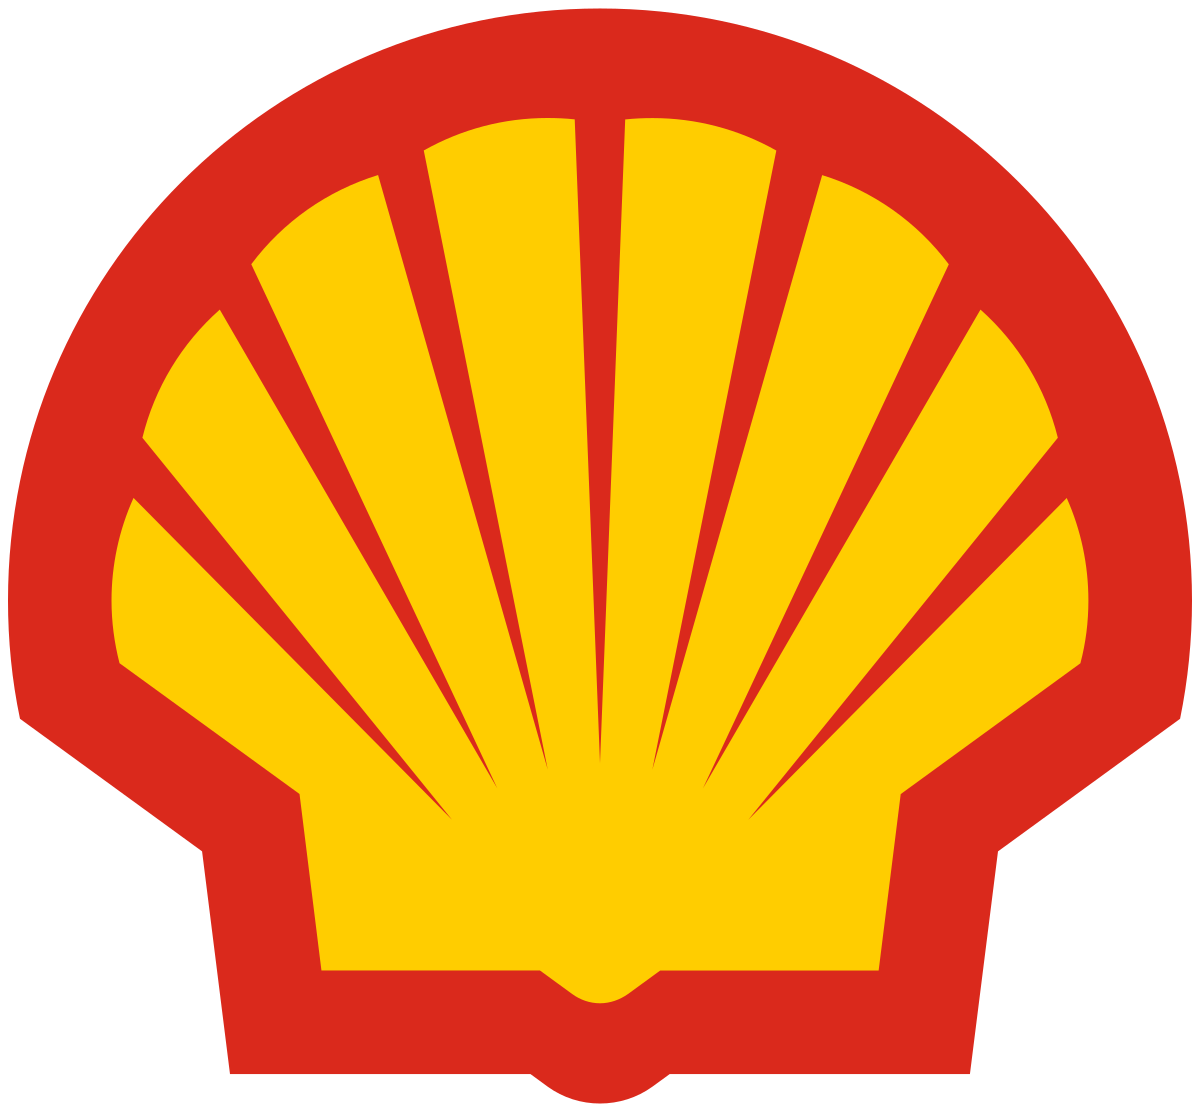 Shell logo svg